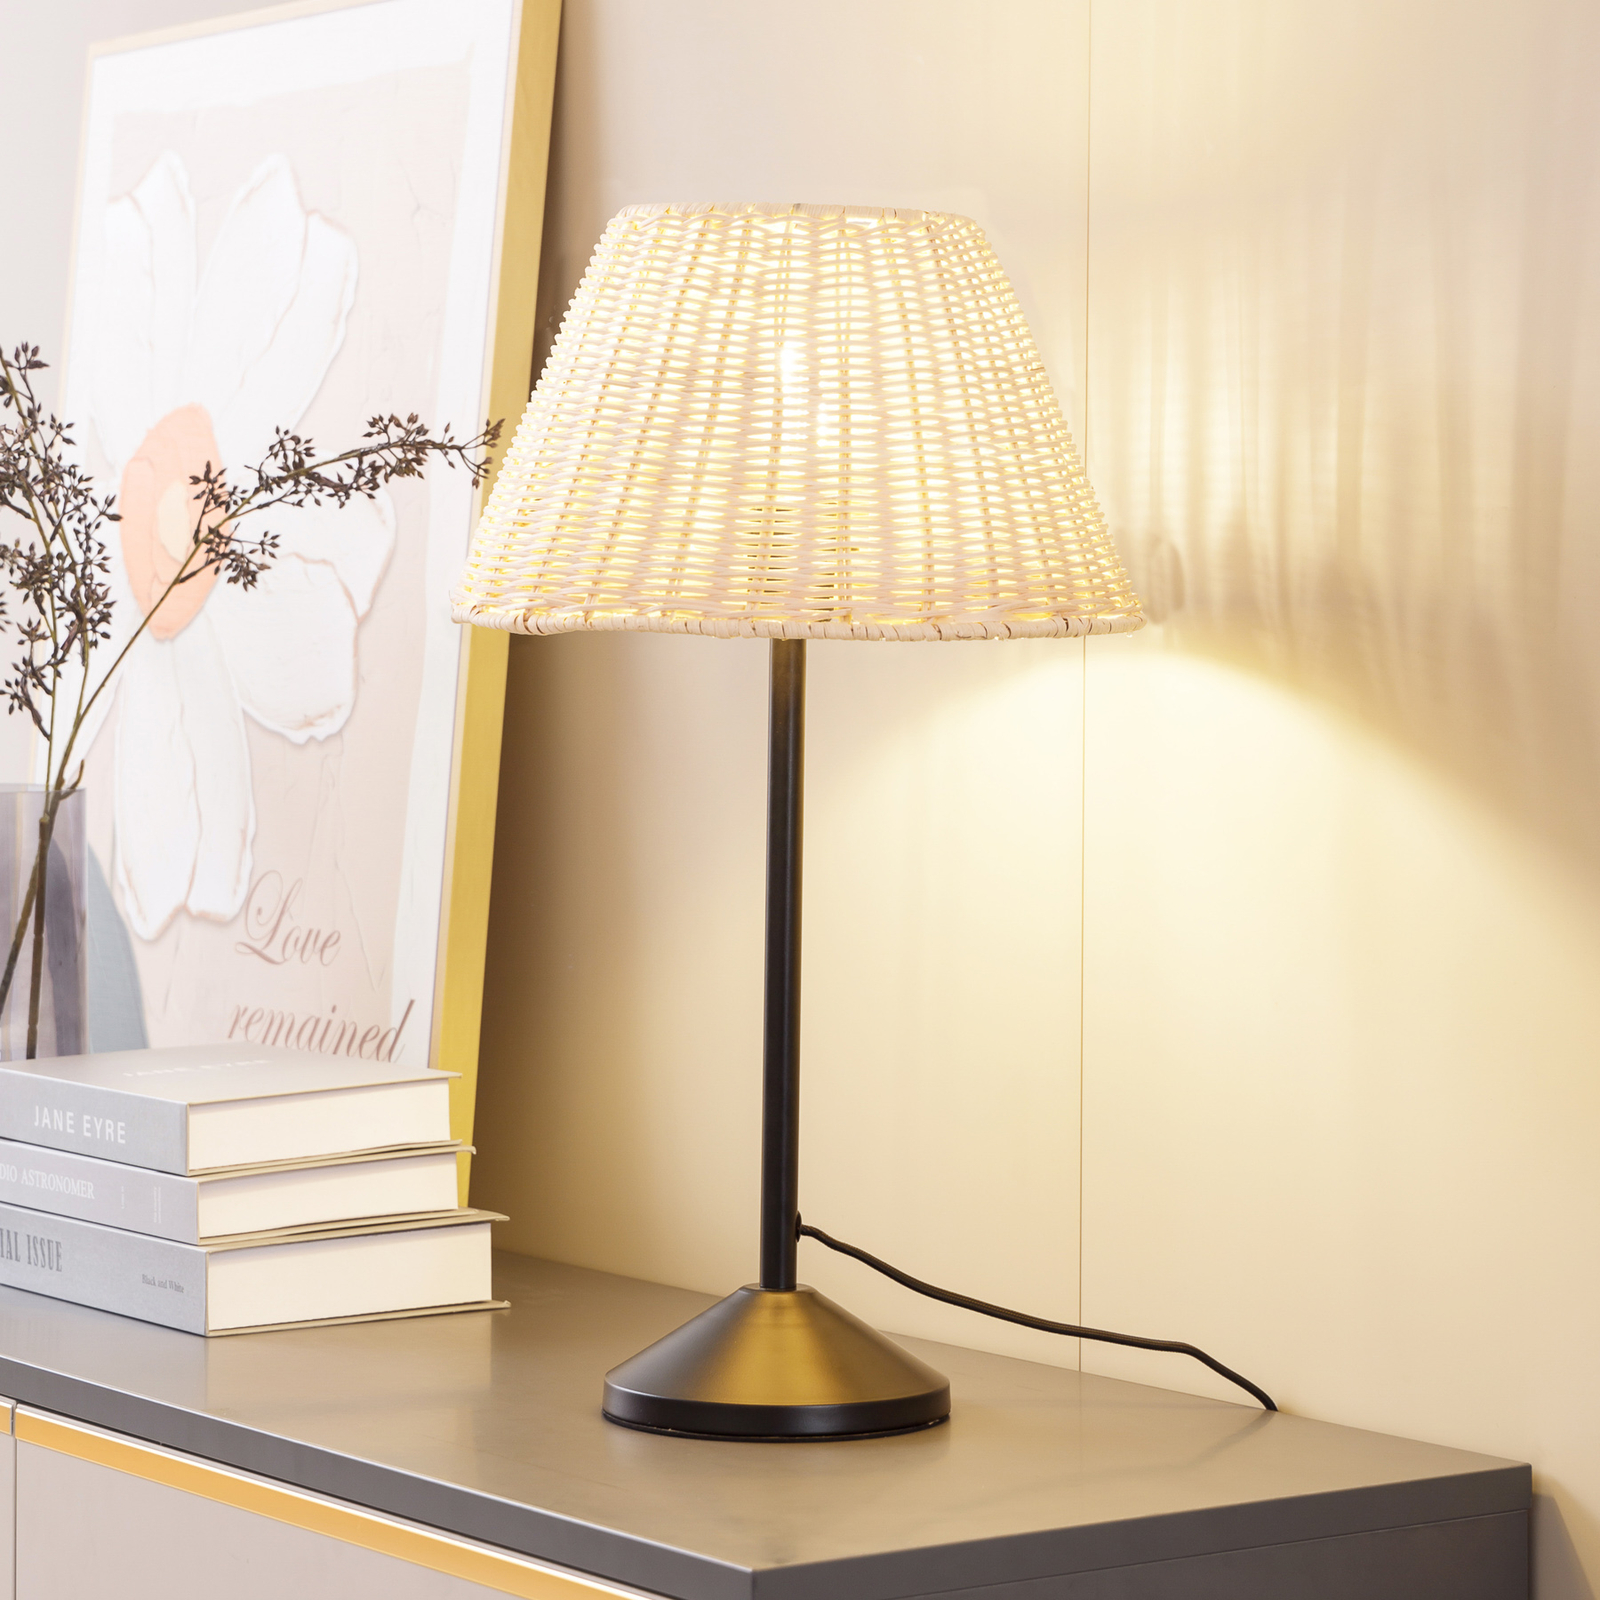 Lindby lampe à poser Zyralia, couleur bois, rotin, Ø 30 cm